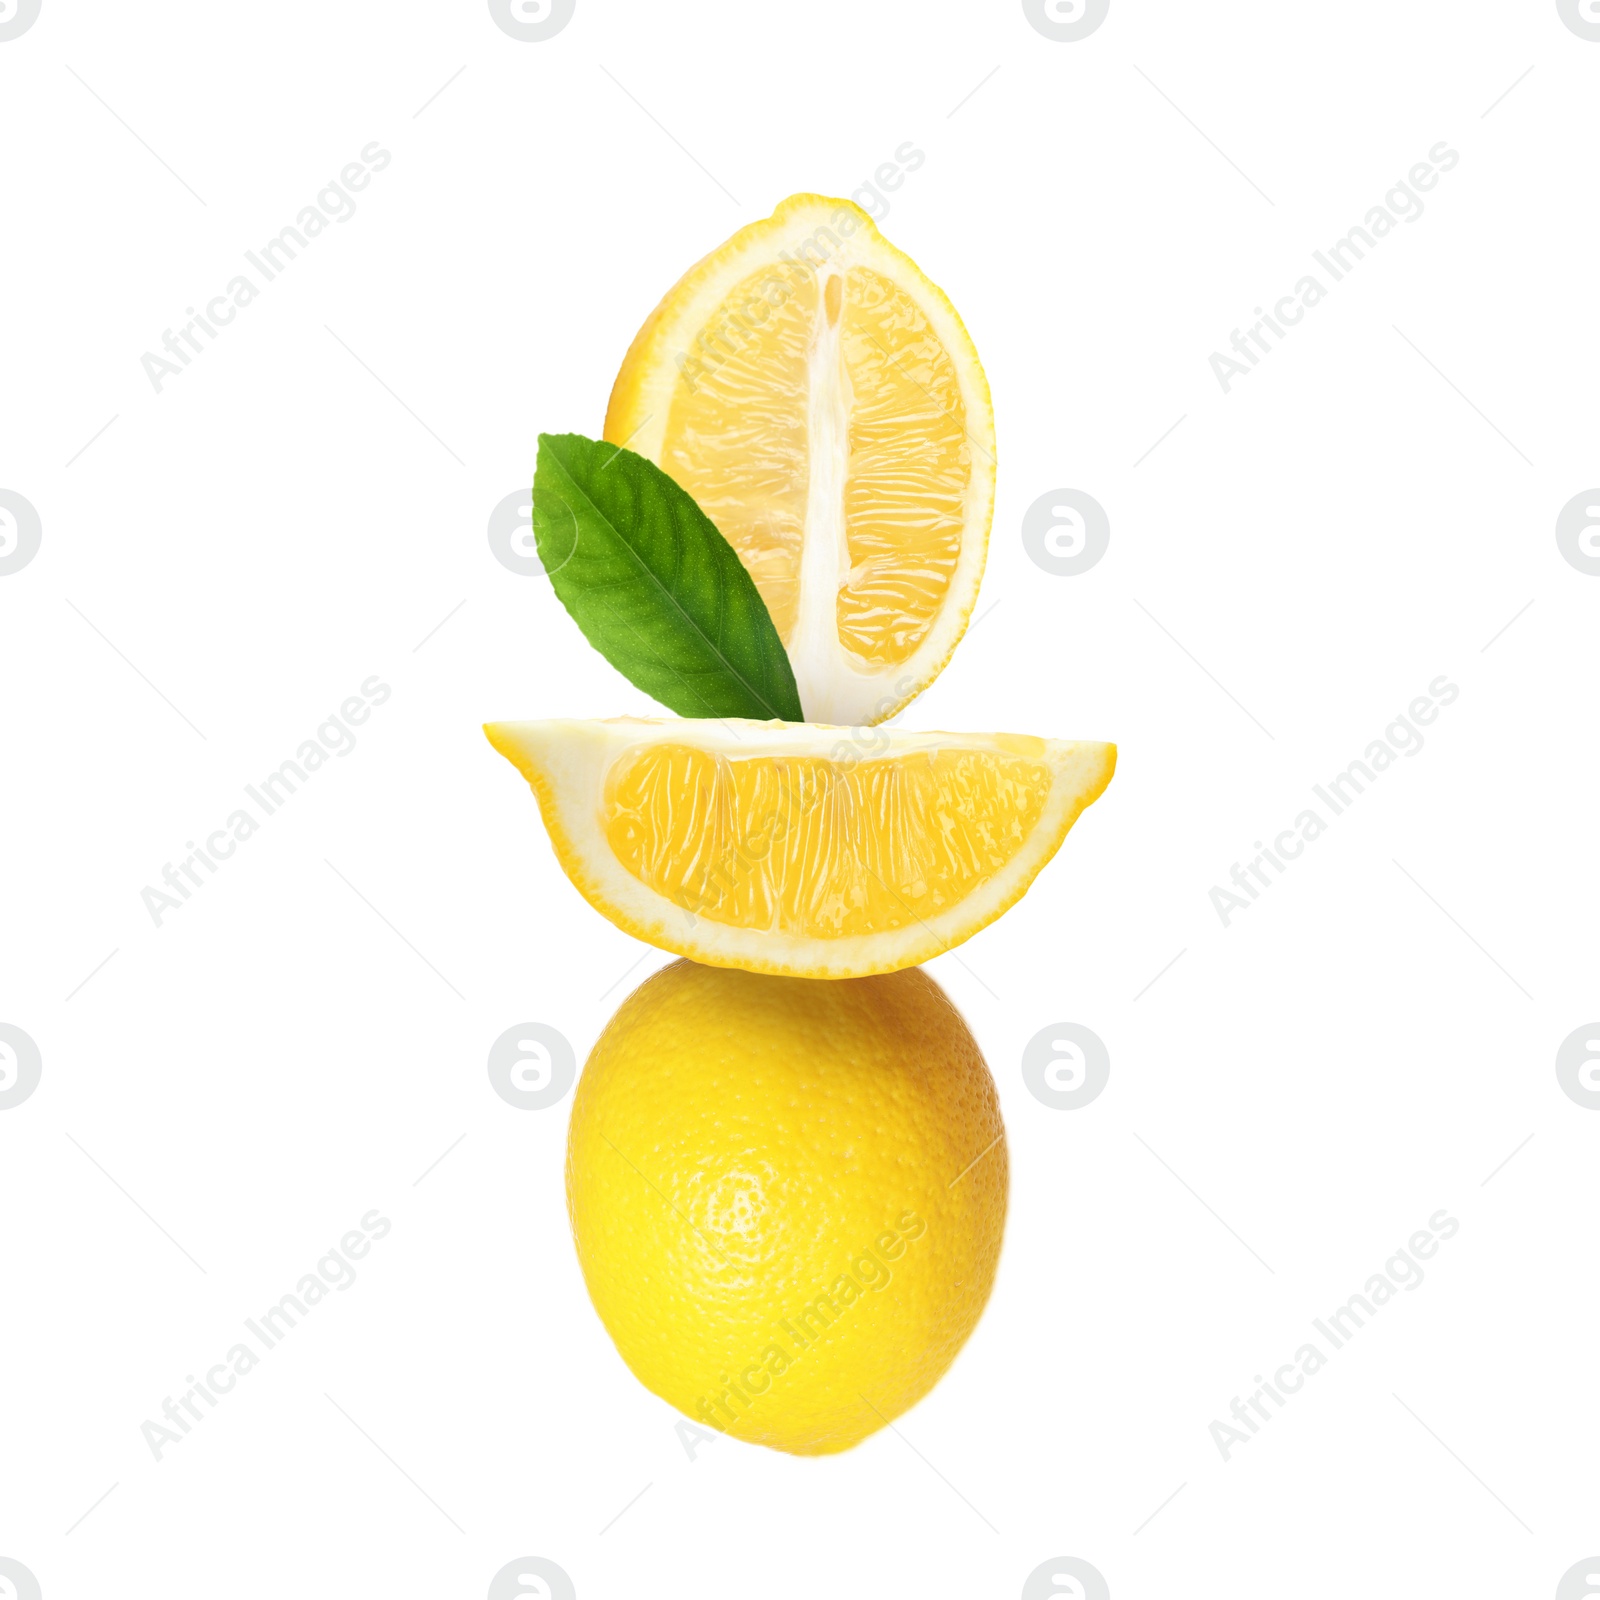 Image of Cut and whole fresh lemons with leaf isolated on white